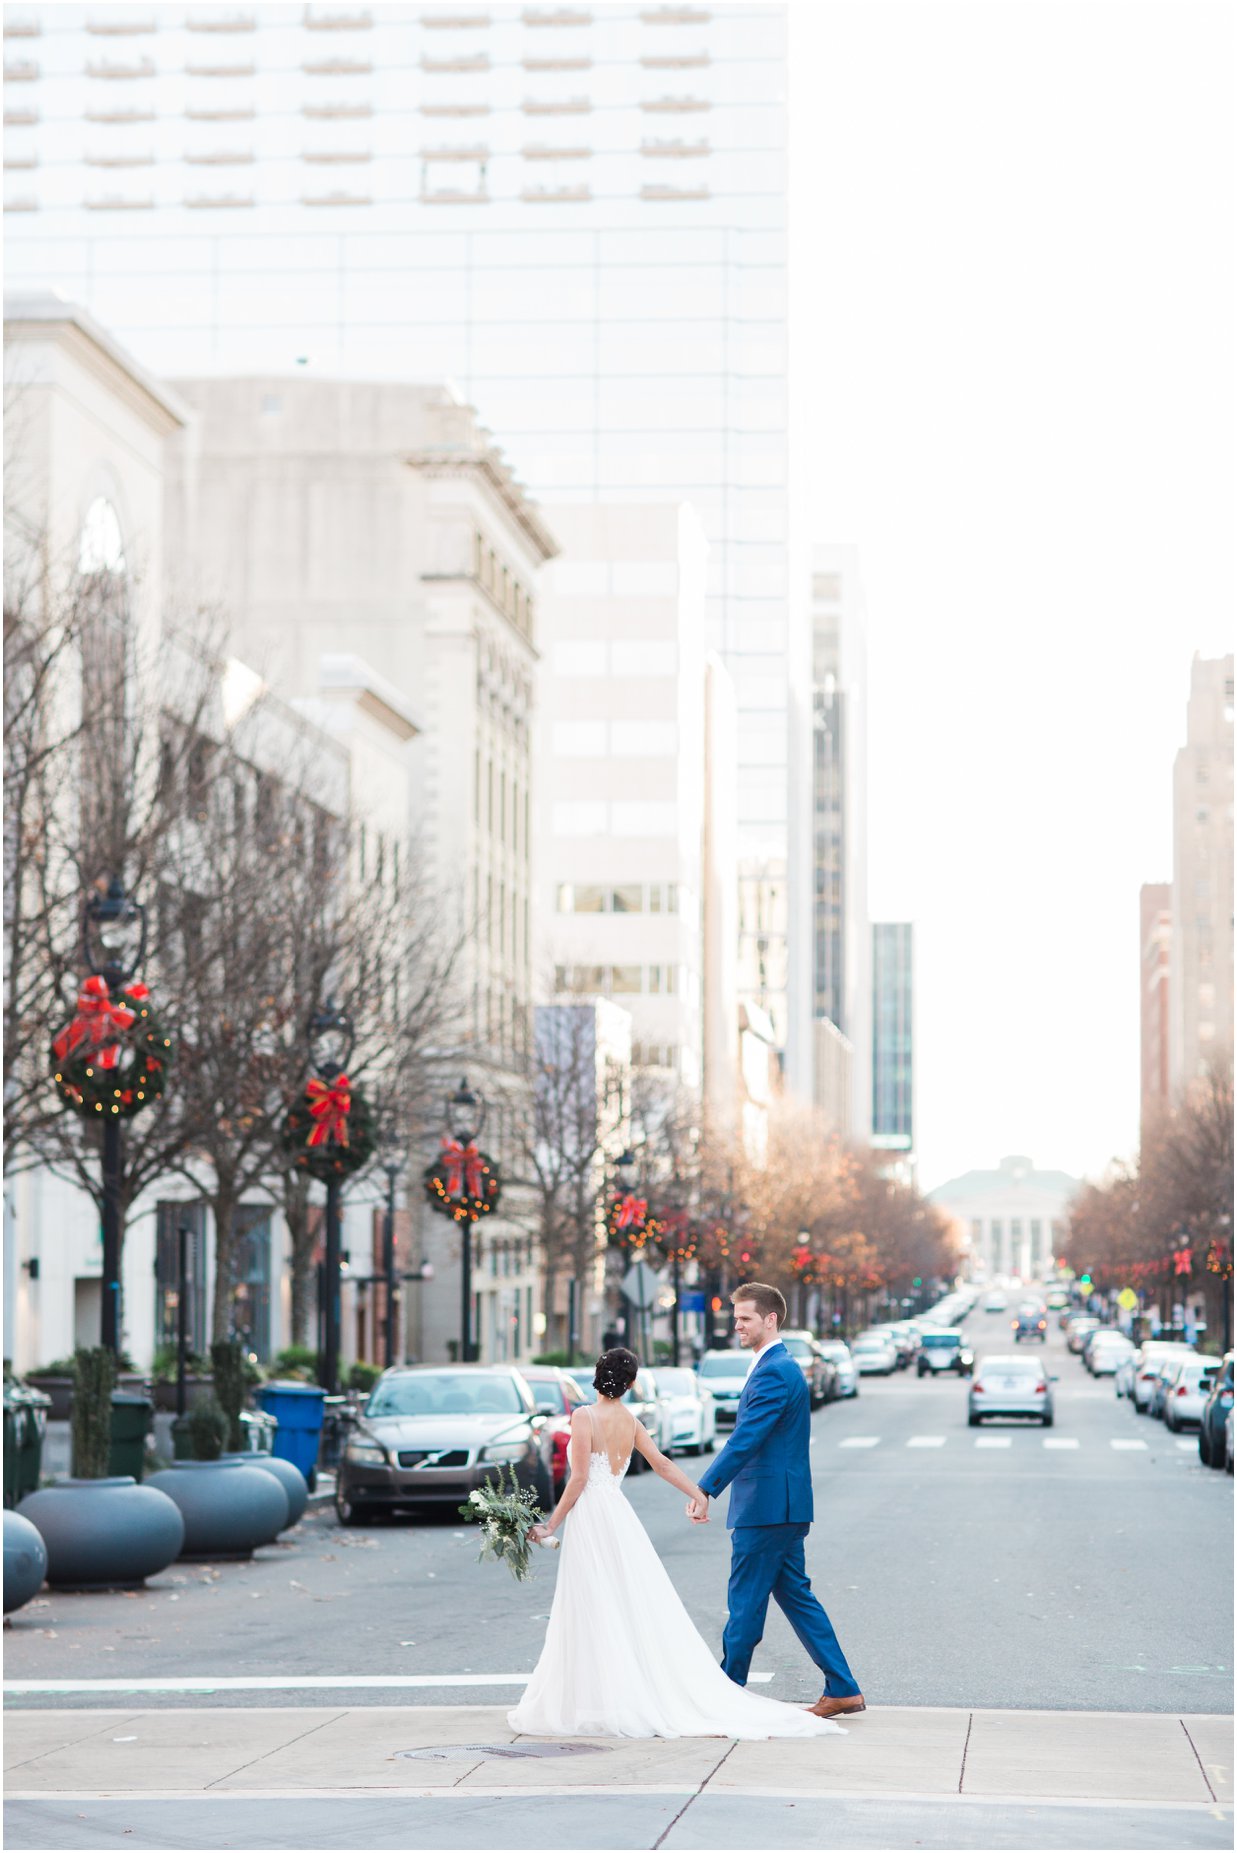 Downtown Raleigh winter wedding